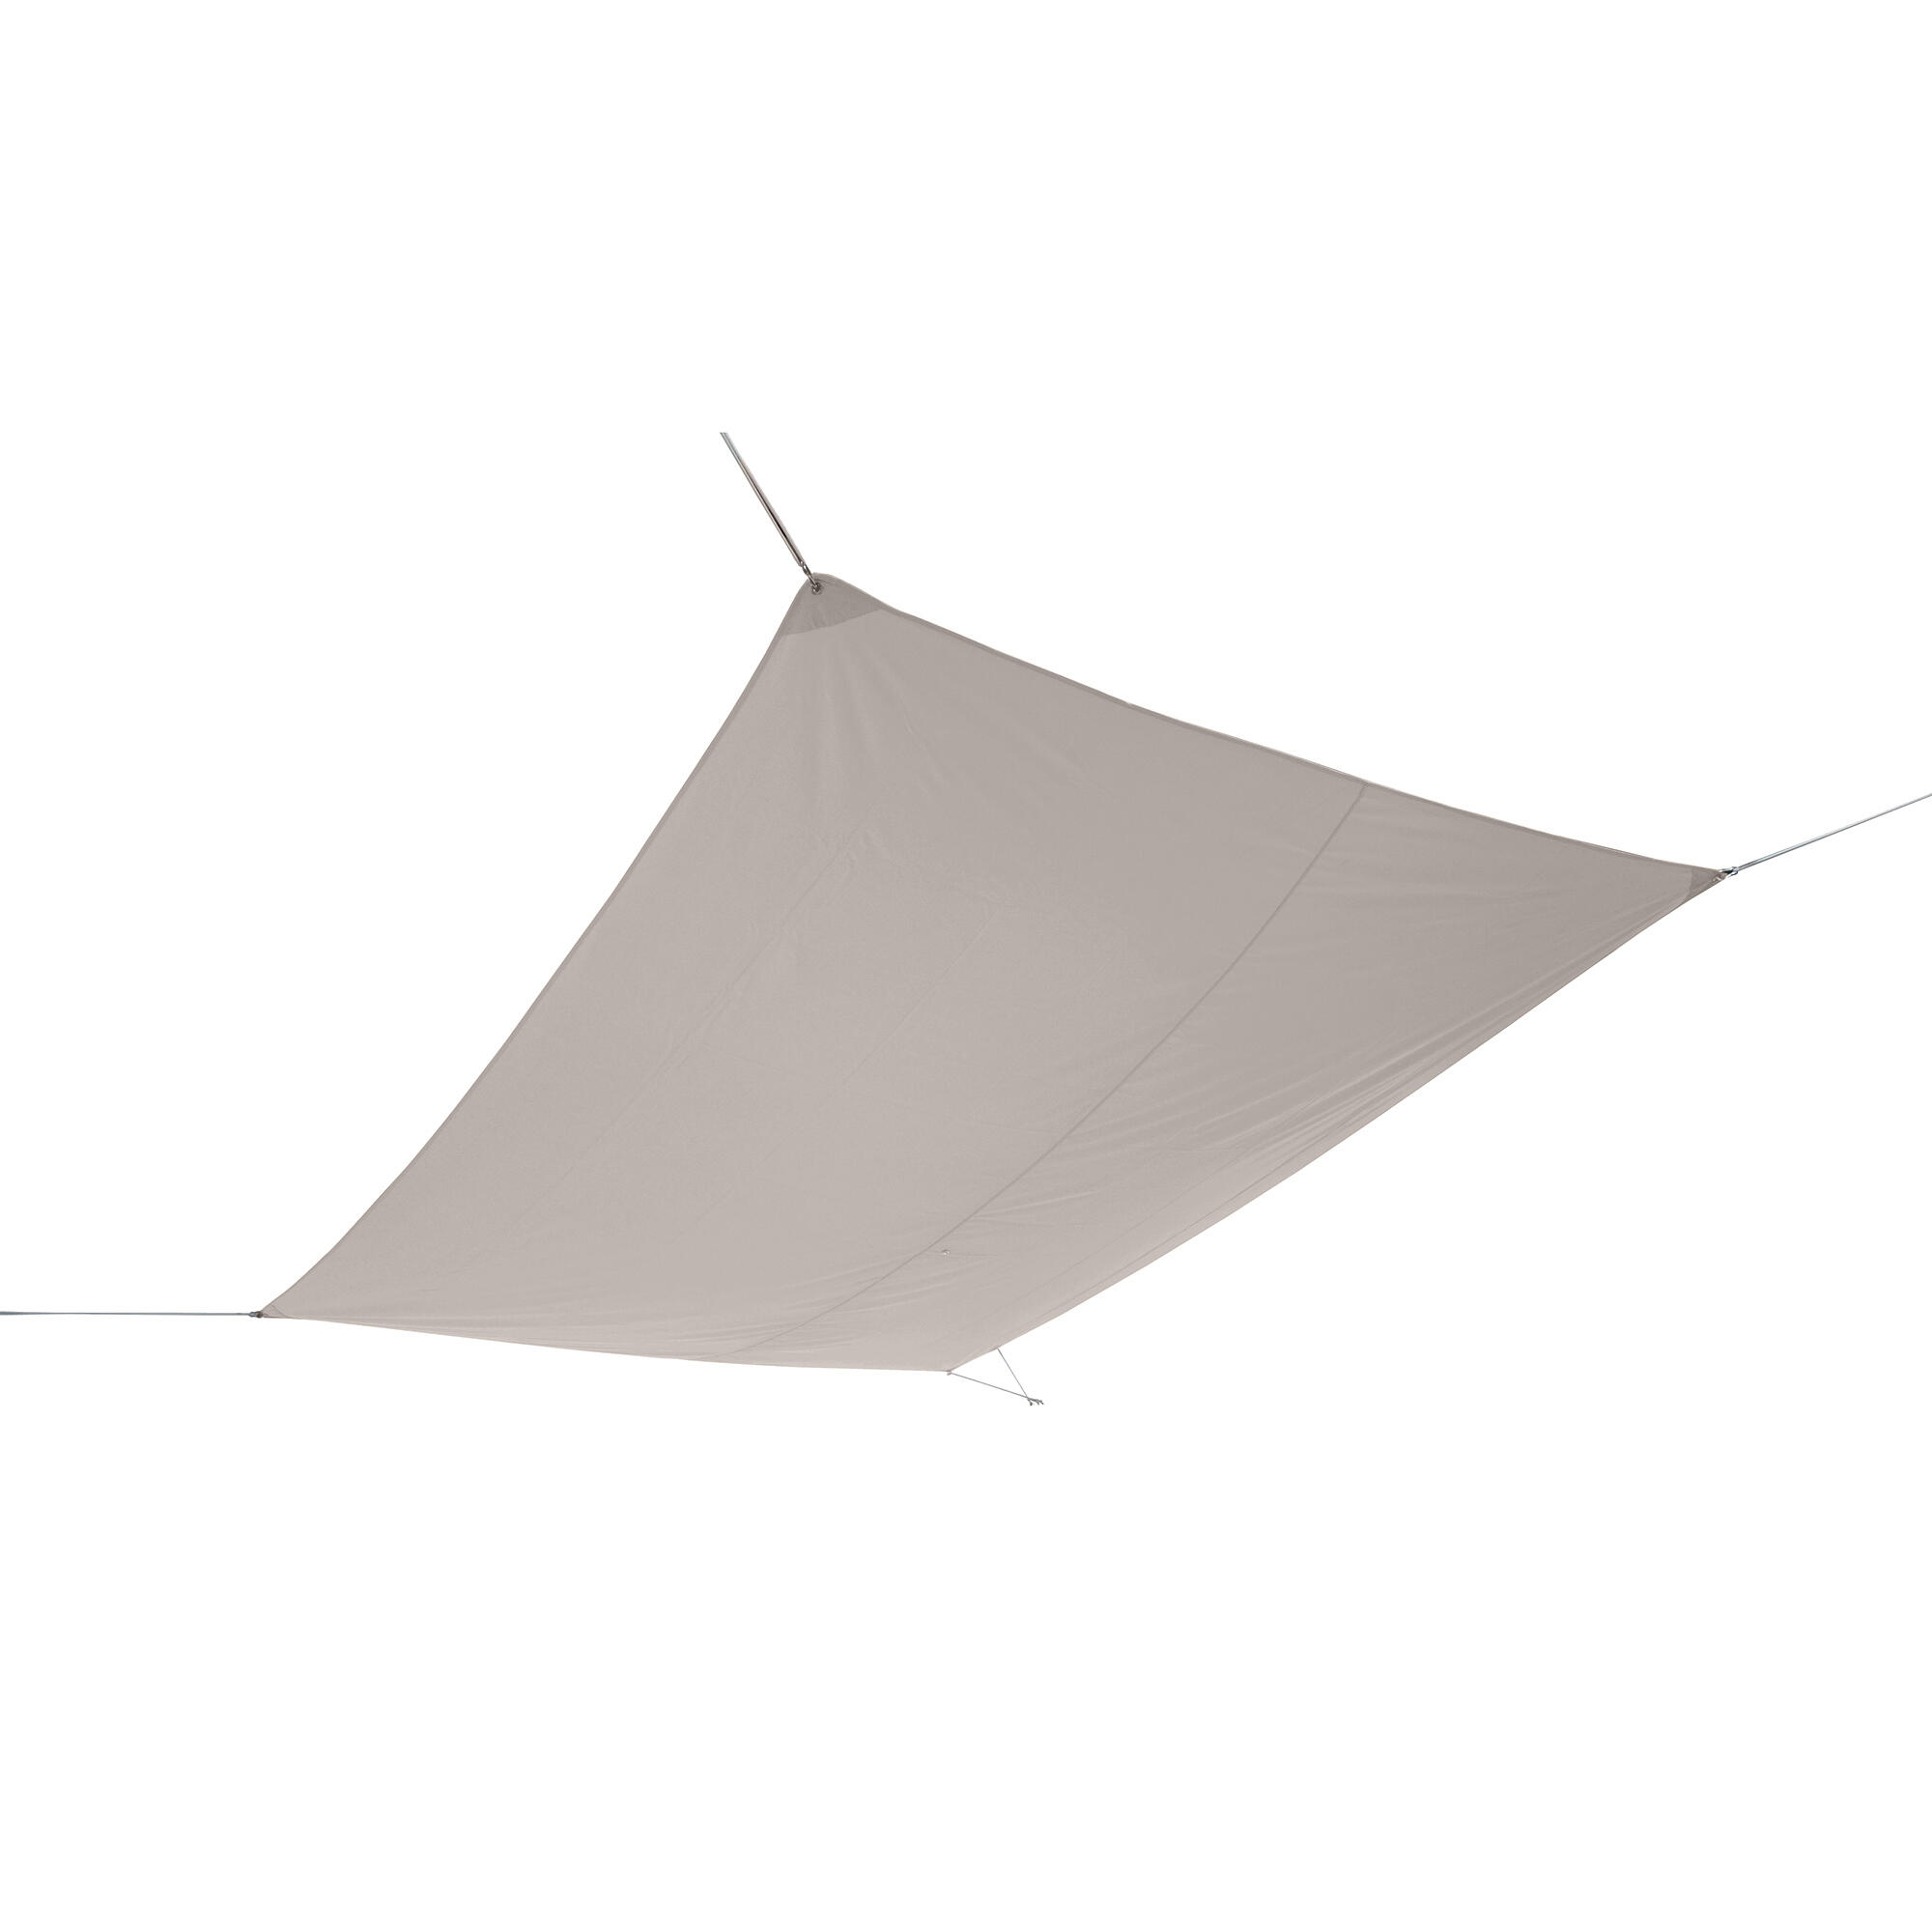 Vela ombreggiante Hegoa rettangolare tortora 300 x 400 cm - 2